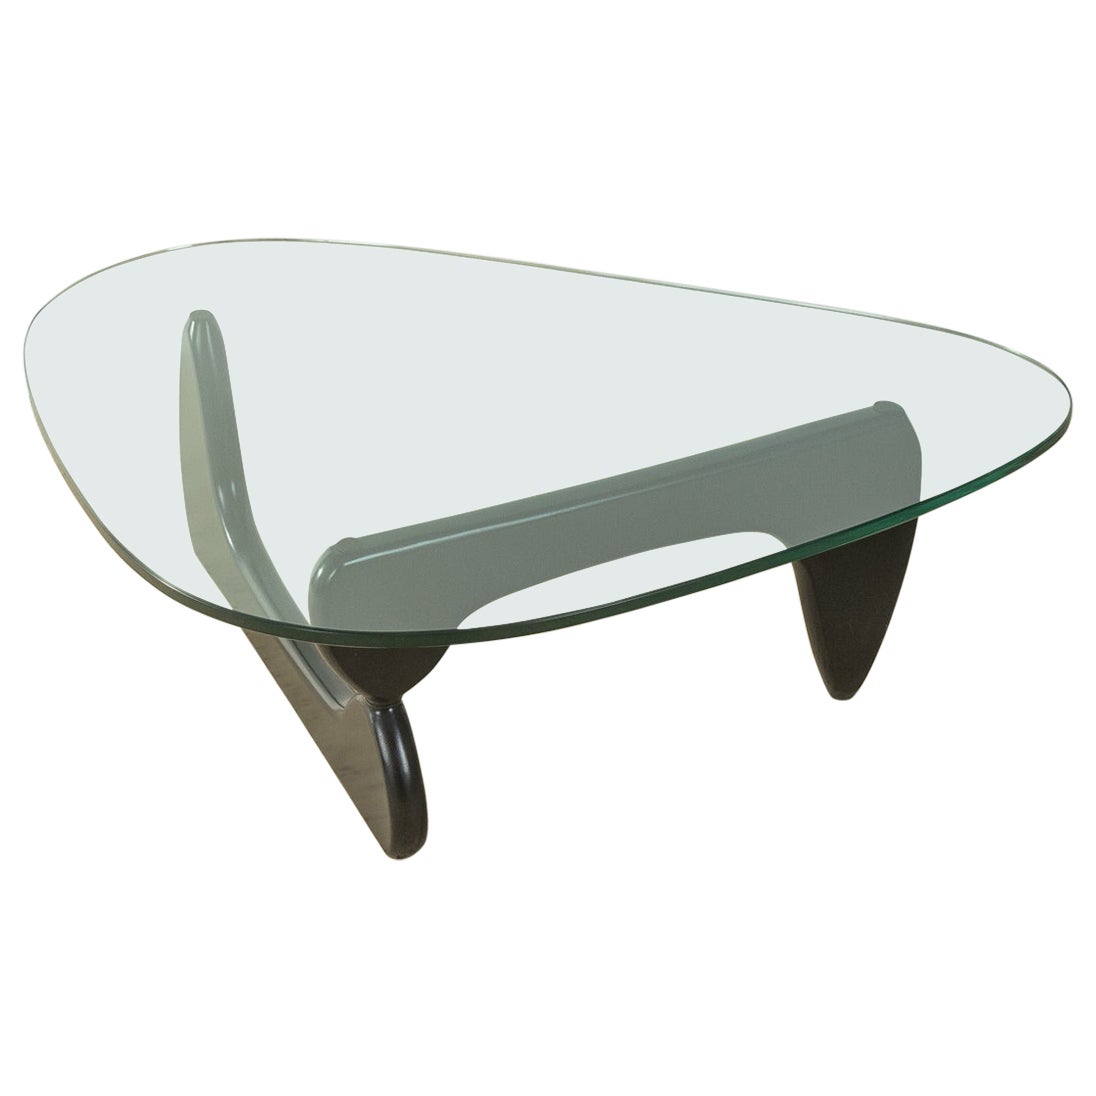 Vitra/Herman Miller by Isamu Noguchi glass coffee table